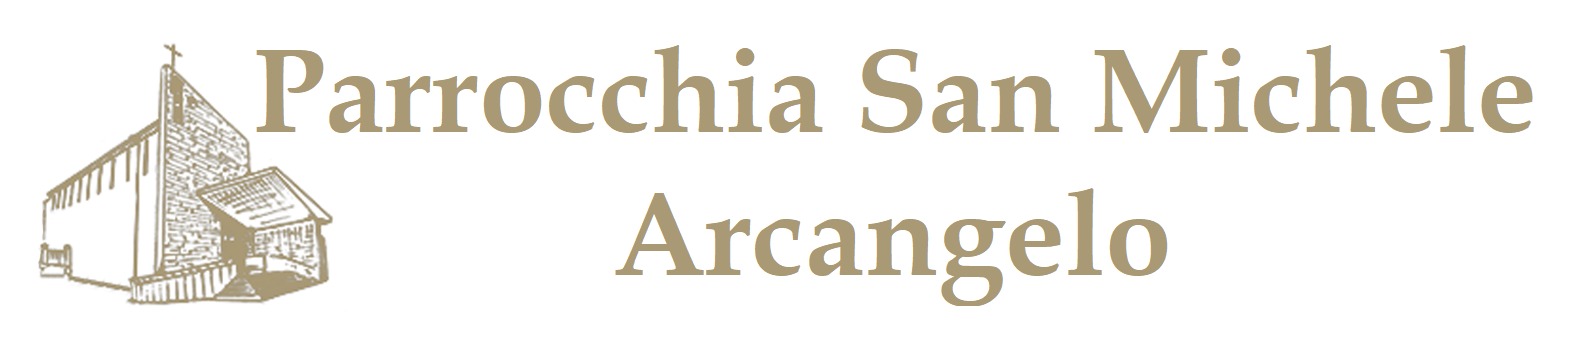 Parrocchia San Michele Arcangelo – Palese (BA)